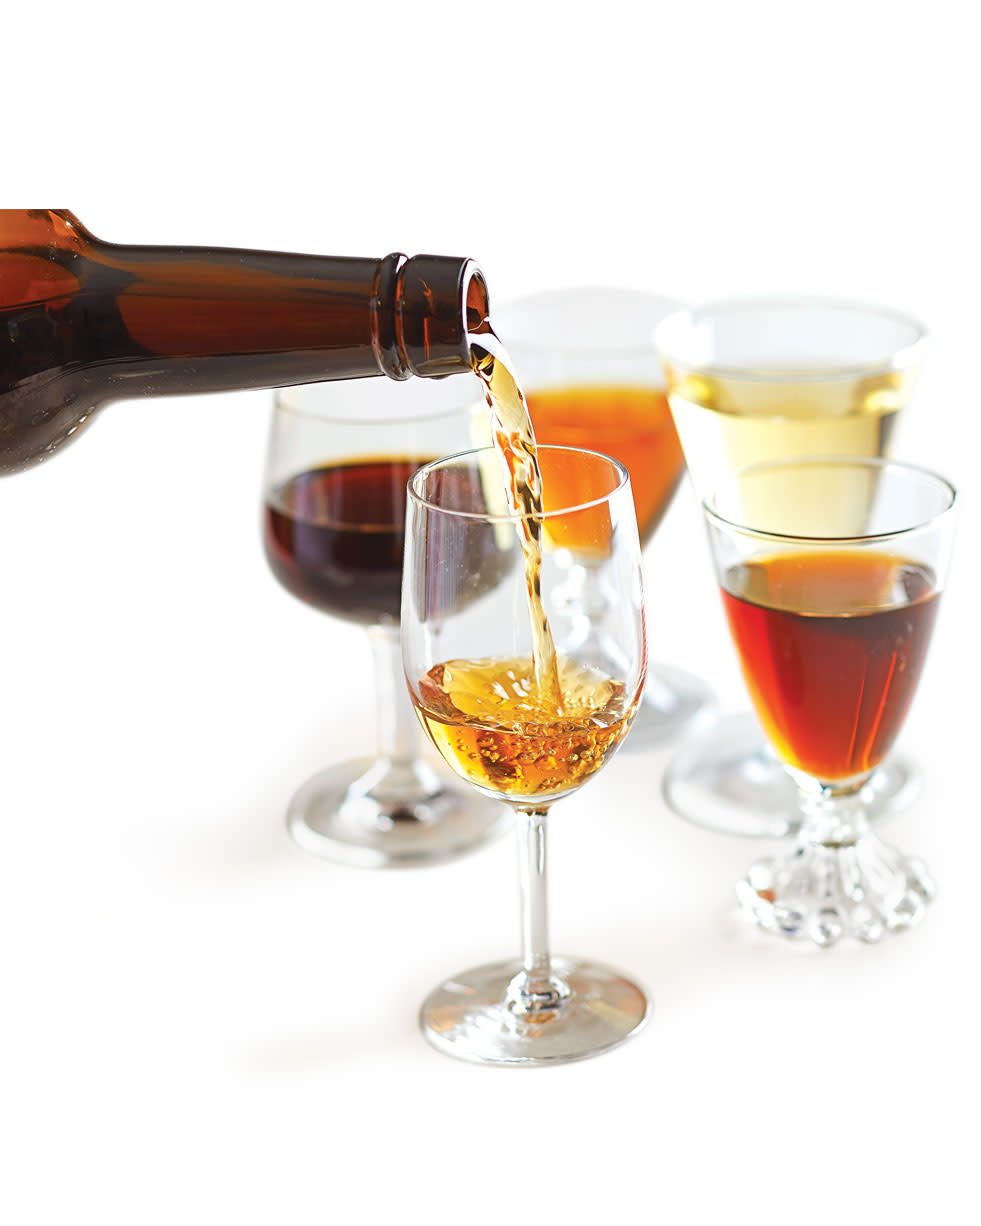 Cooking sherry vs. drinking sherry vs. sherry vinegar